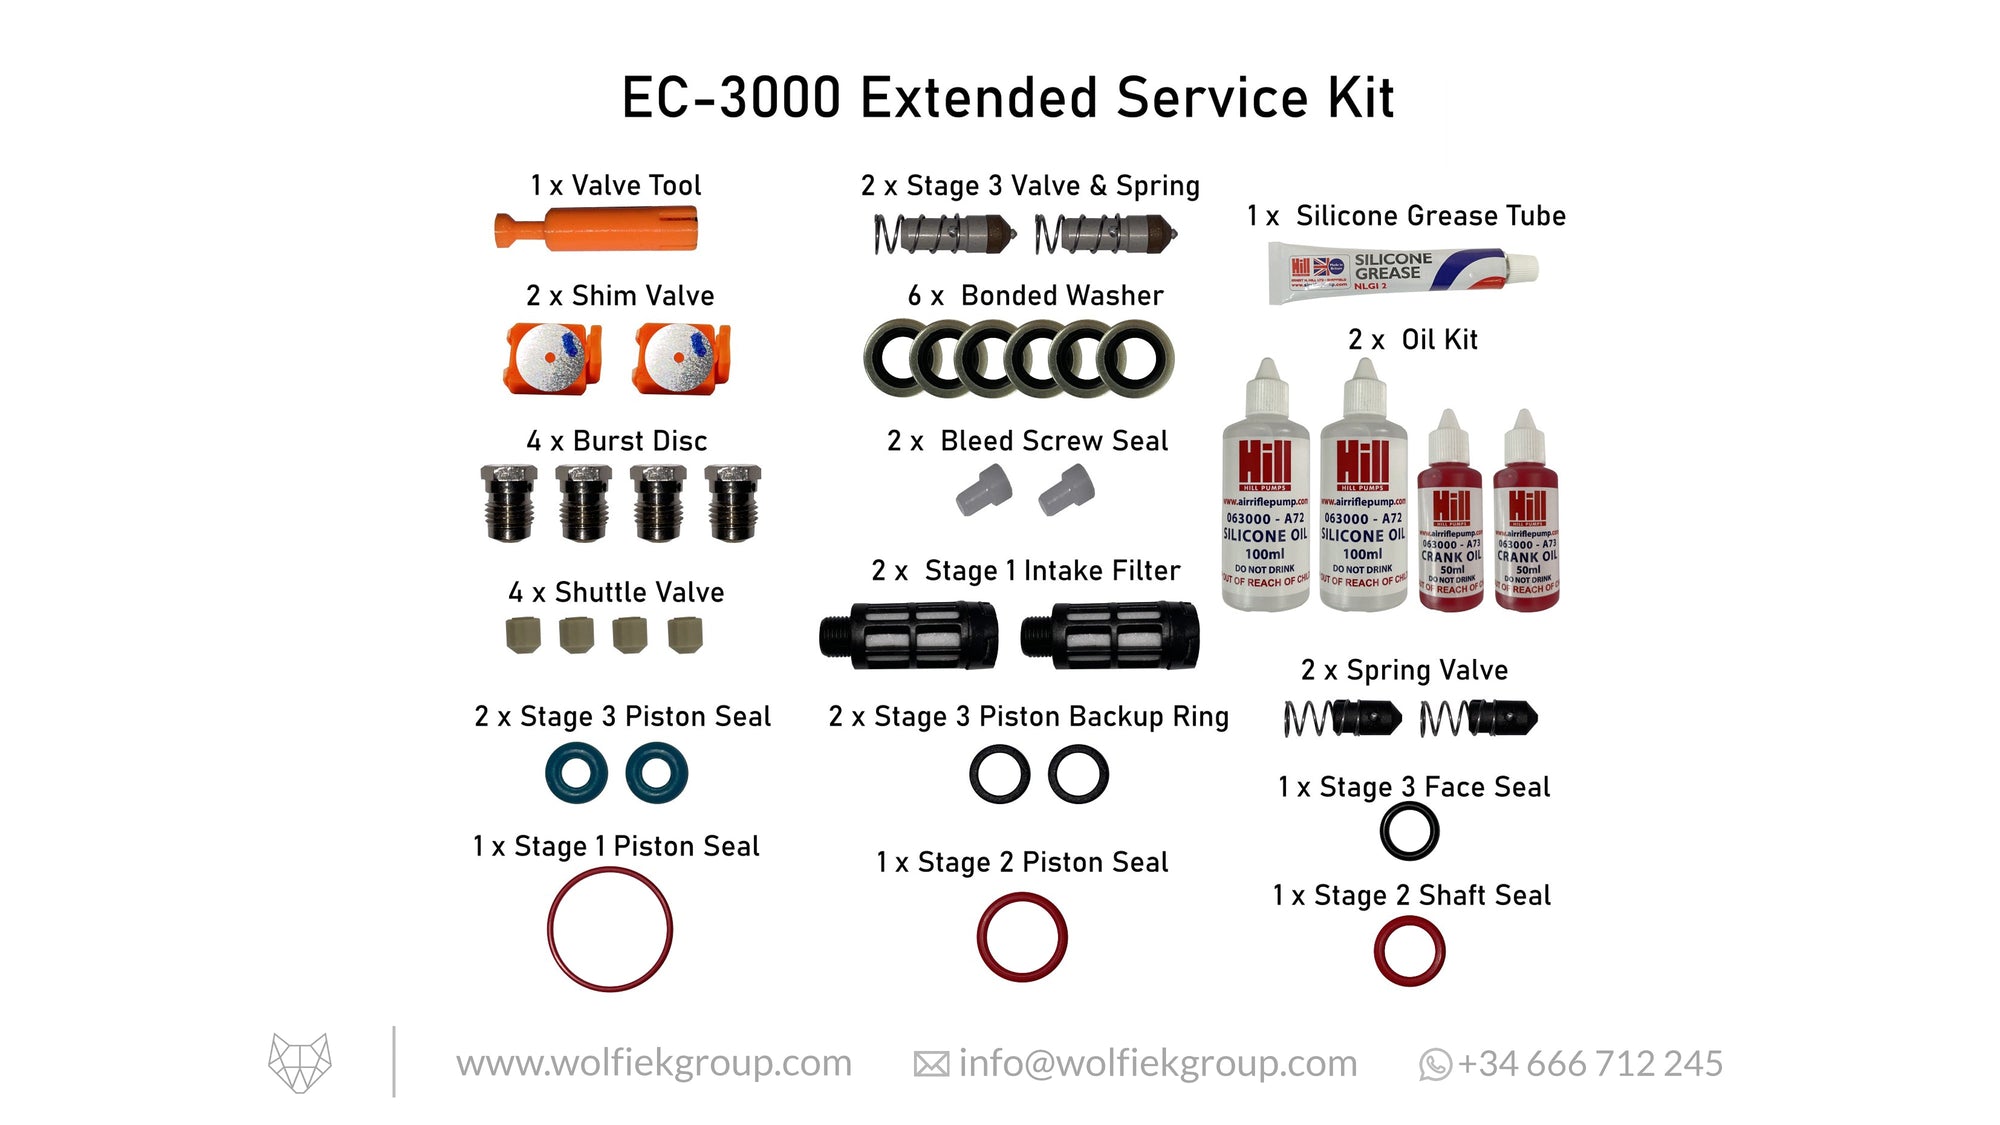 Hill EC-3000 Extended Service Kit